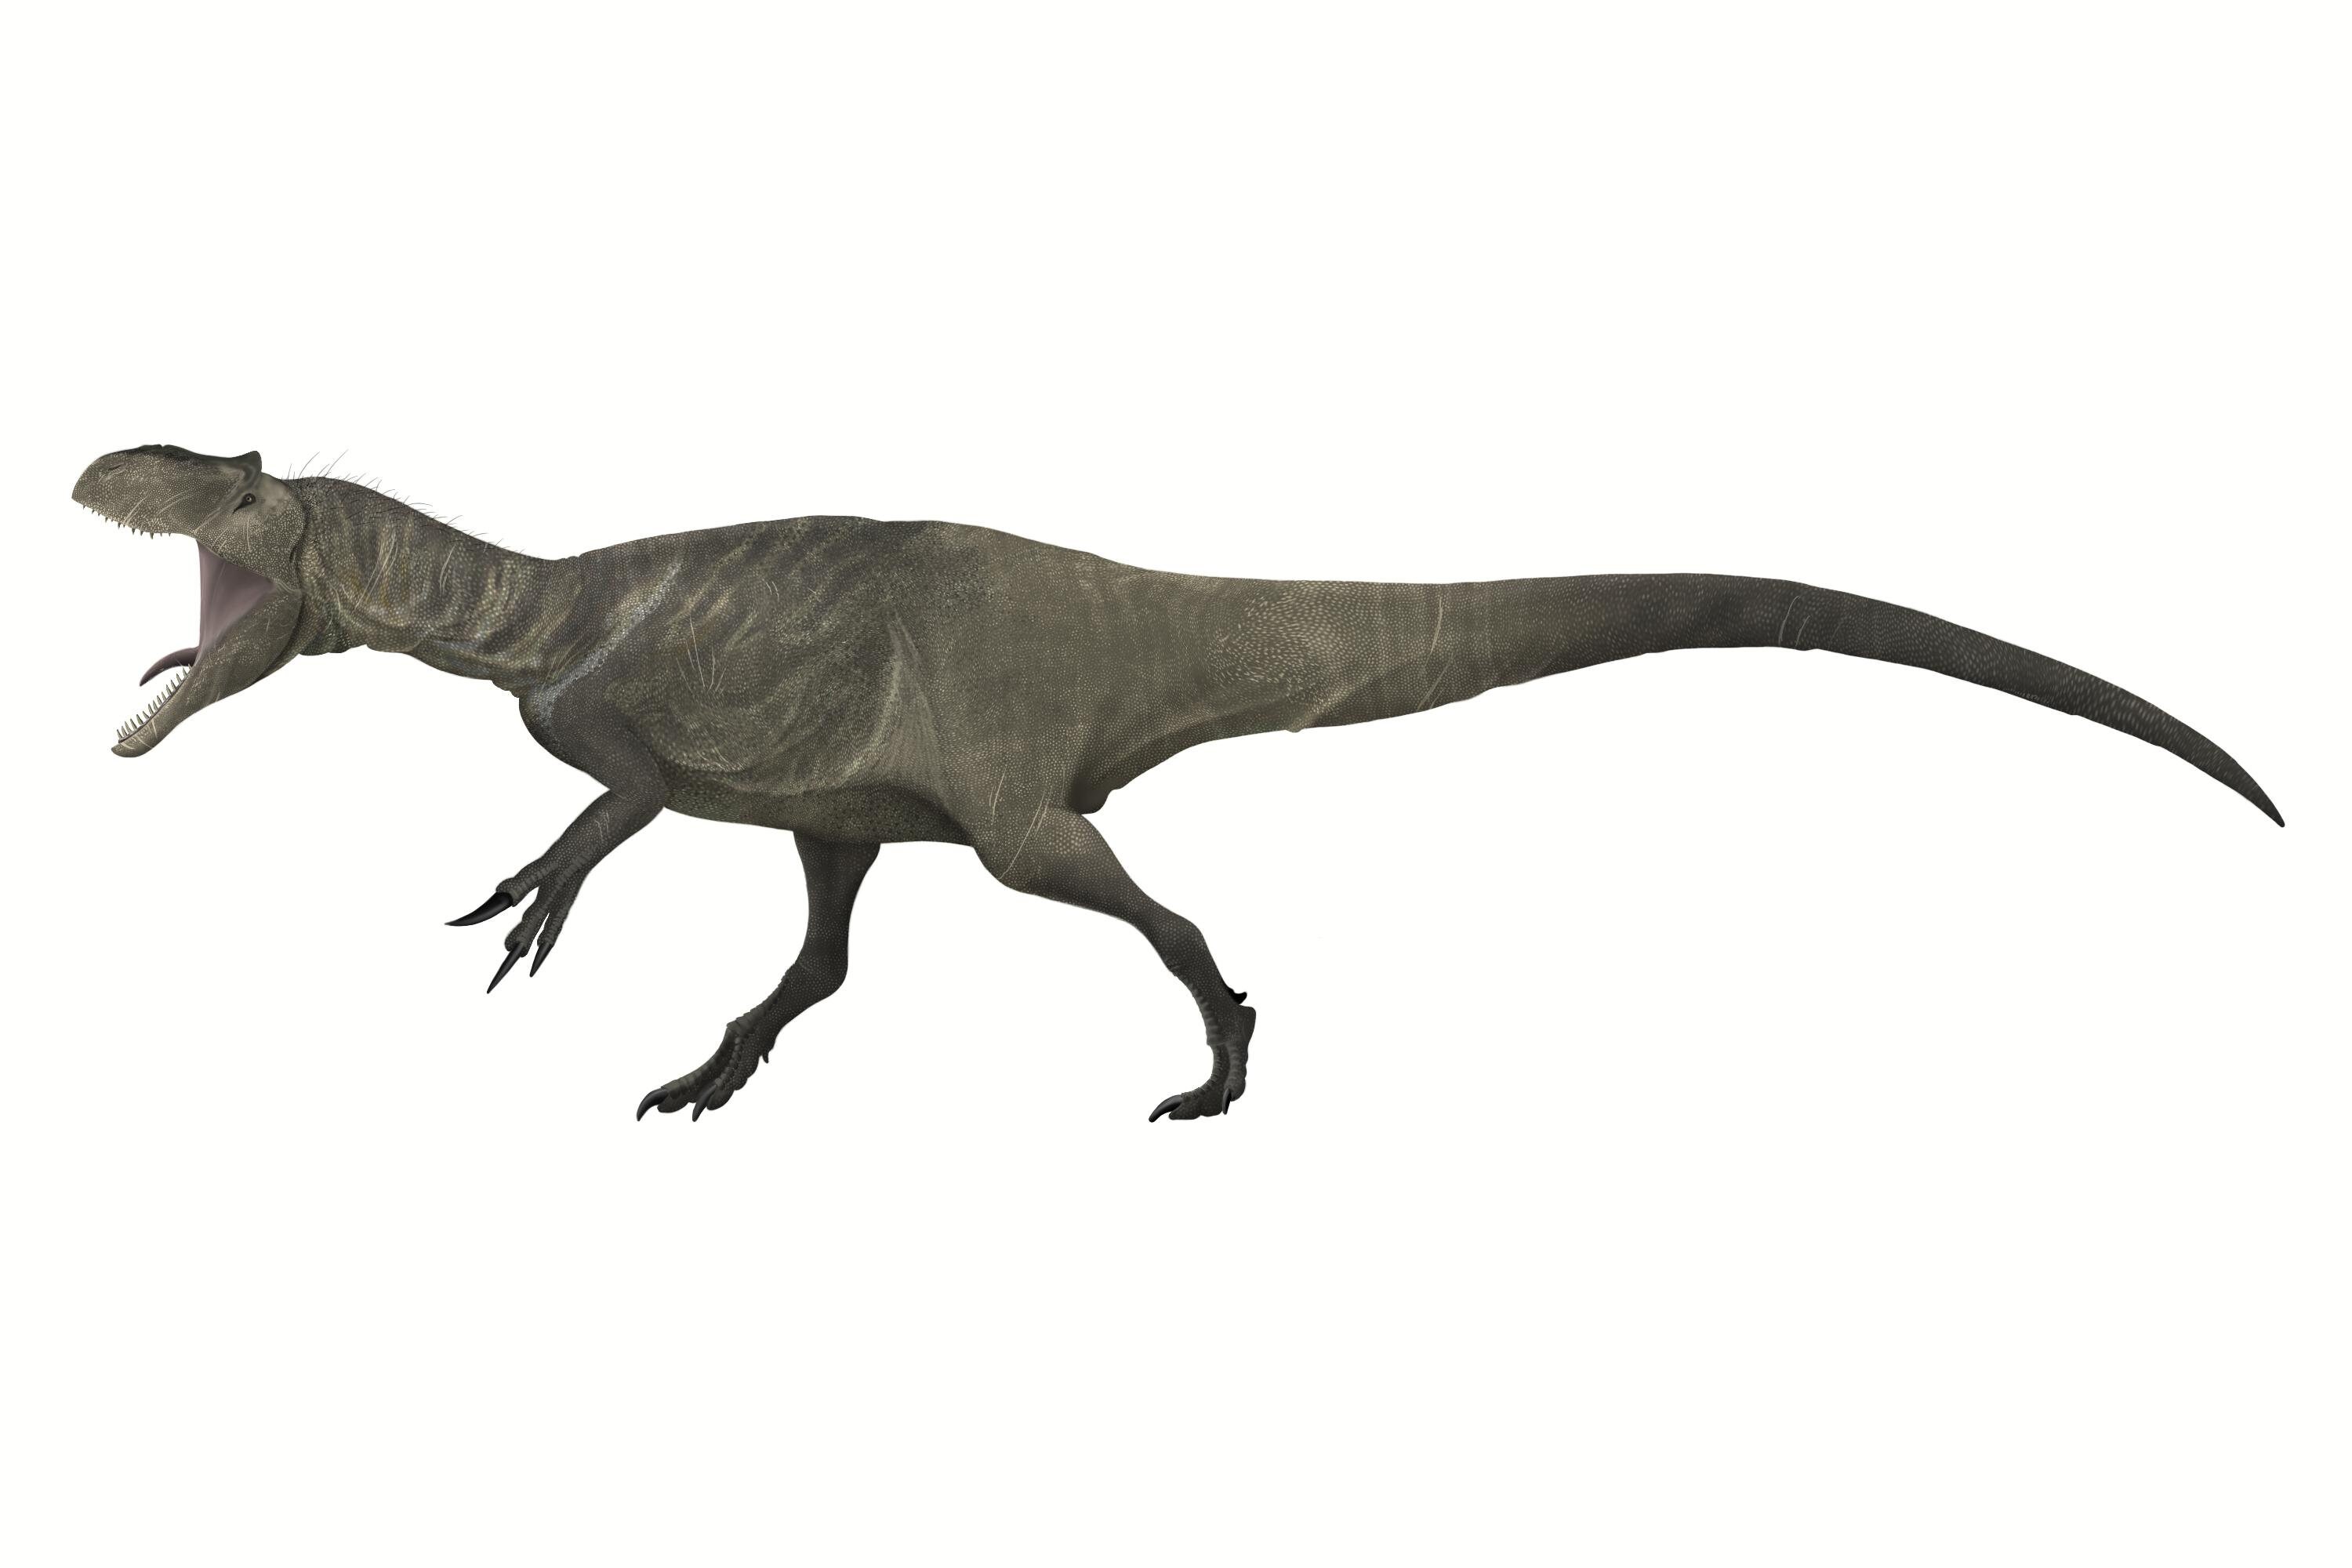 Allosaurus vs trex